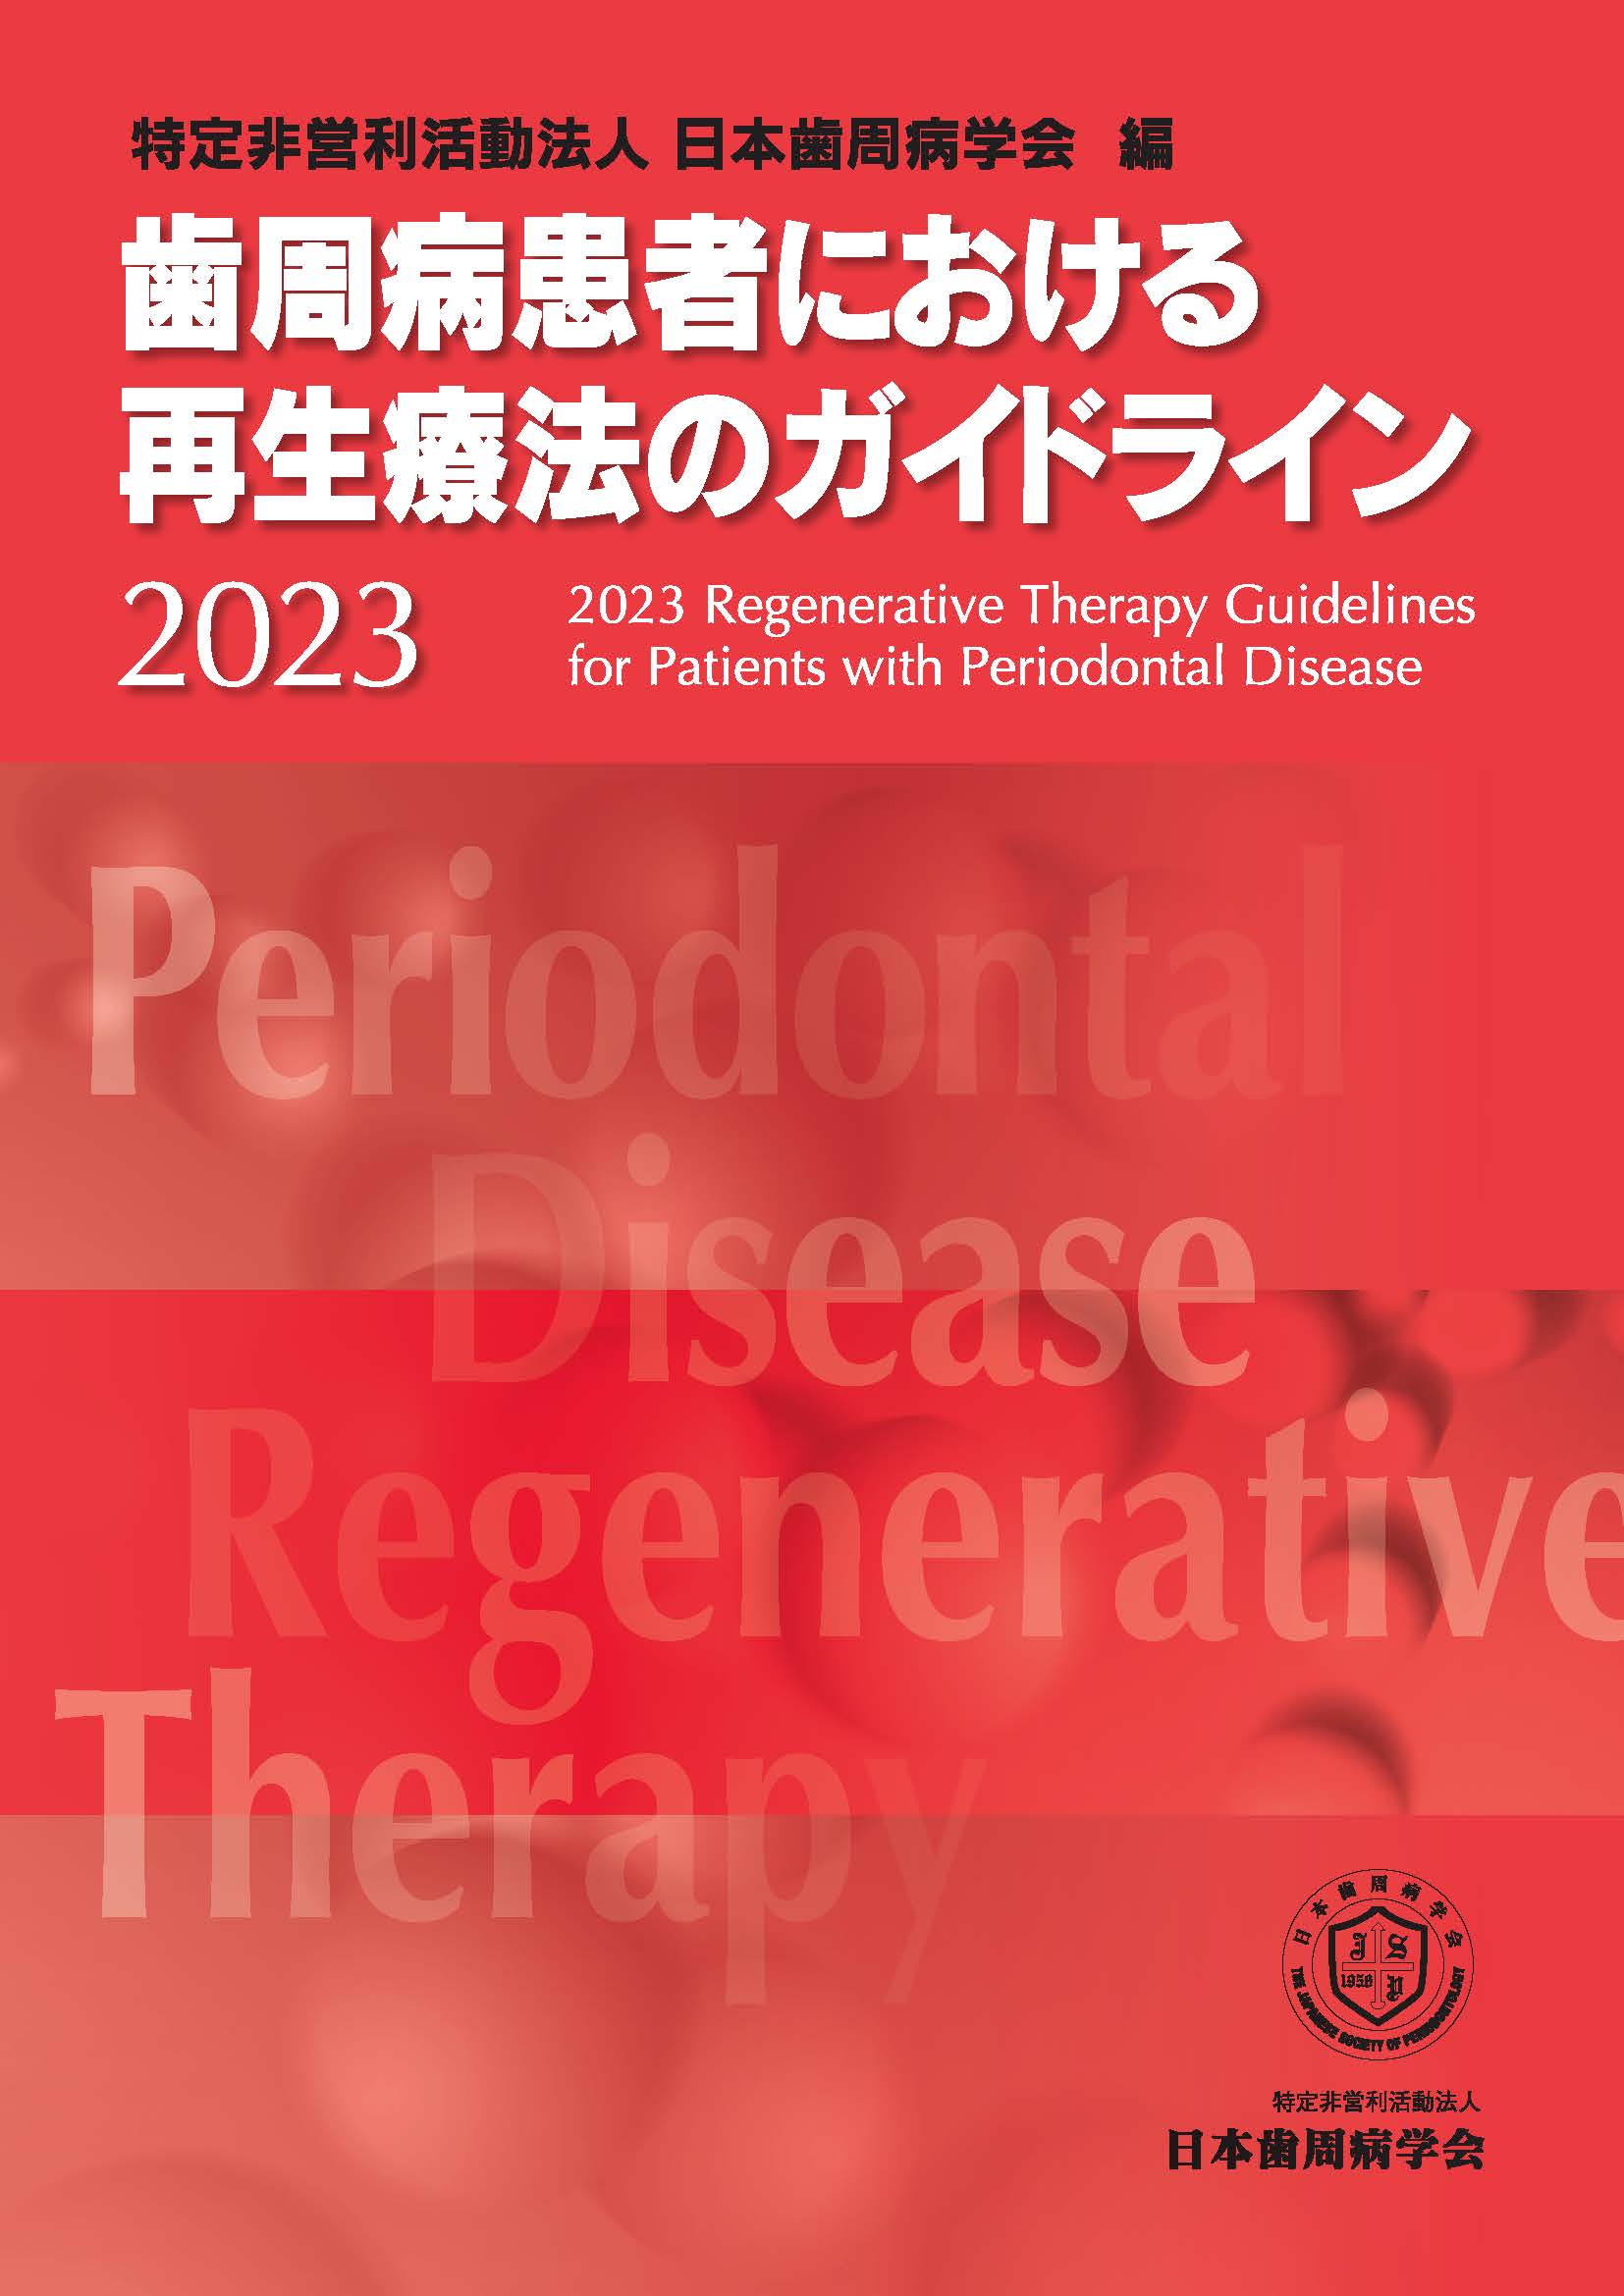 guideline_regenerative_medicine_2023_p_1.jpg